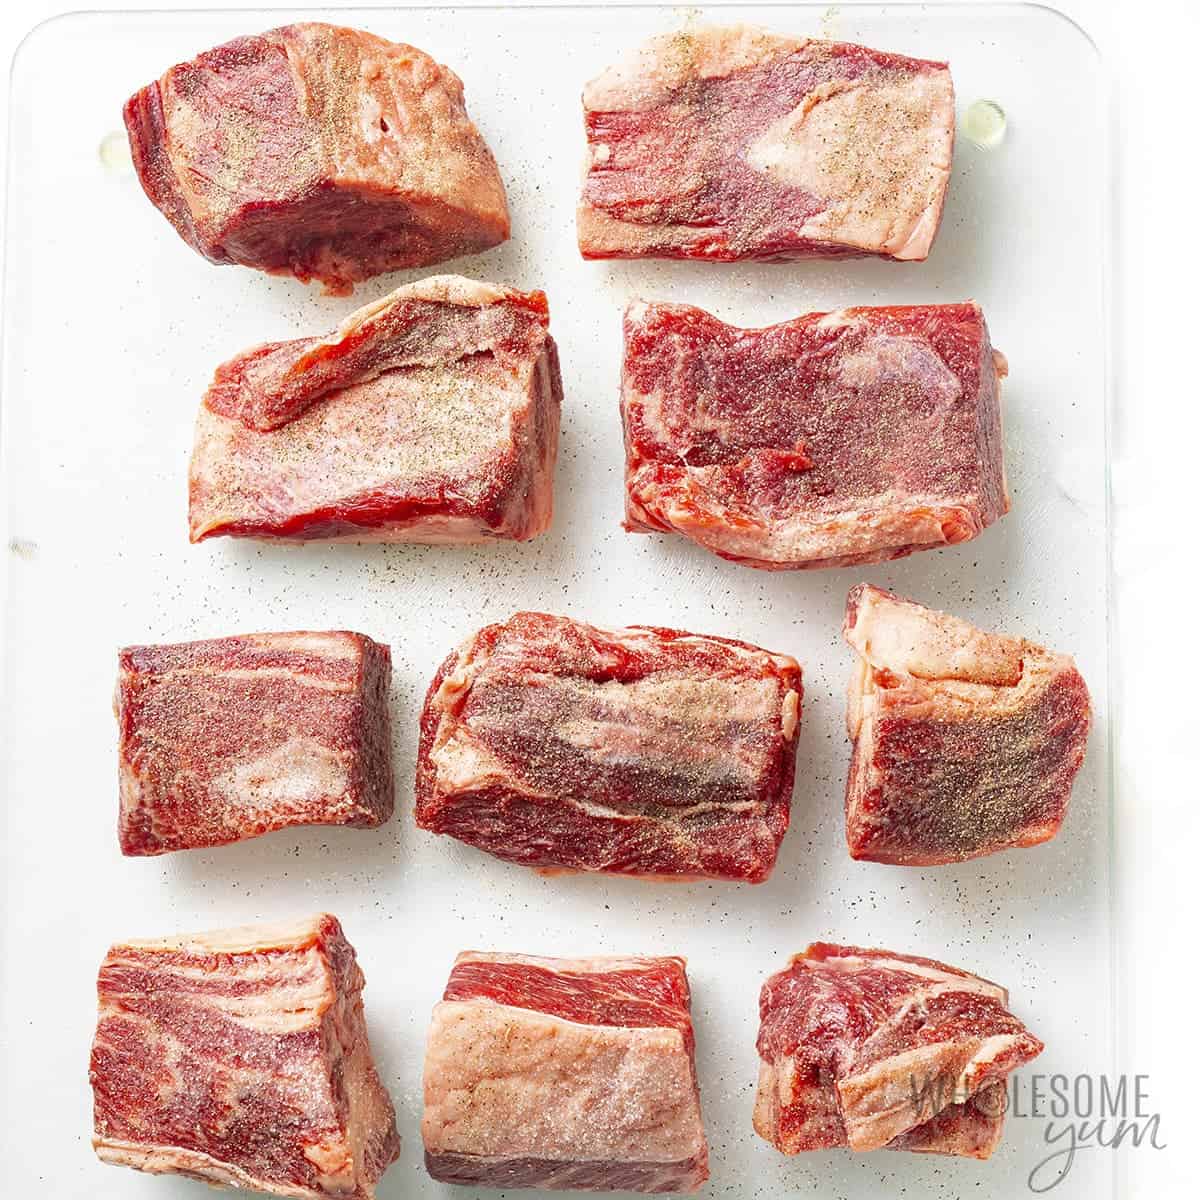 Boneless beef short ribs on a cutting board.